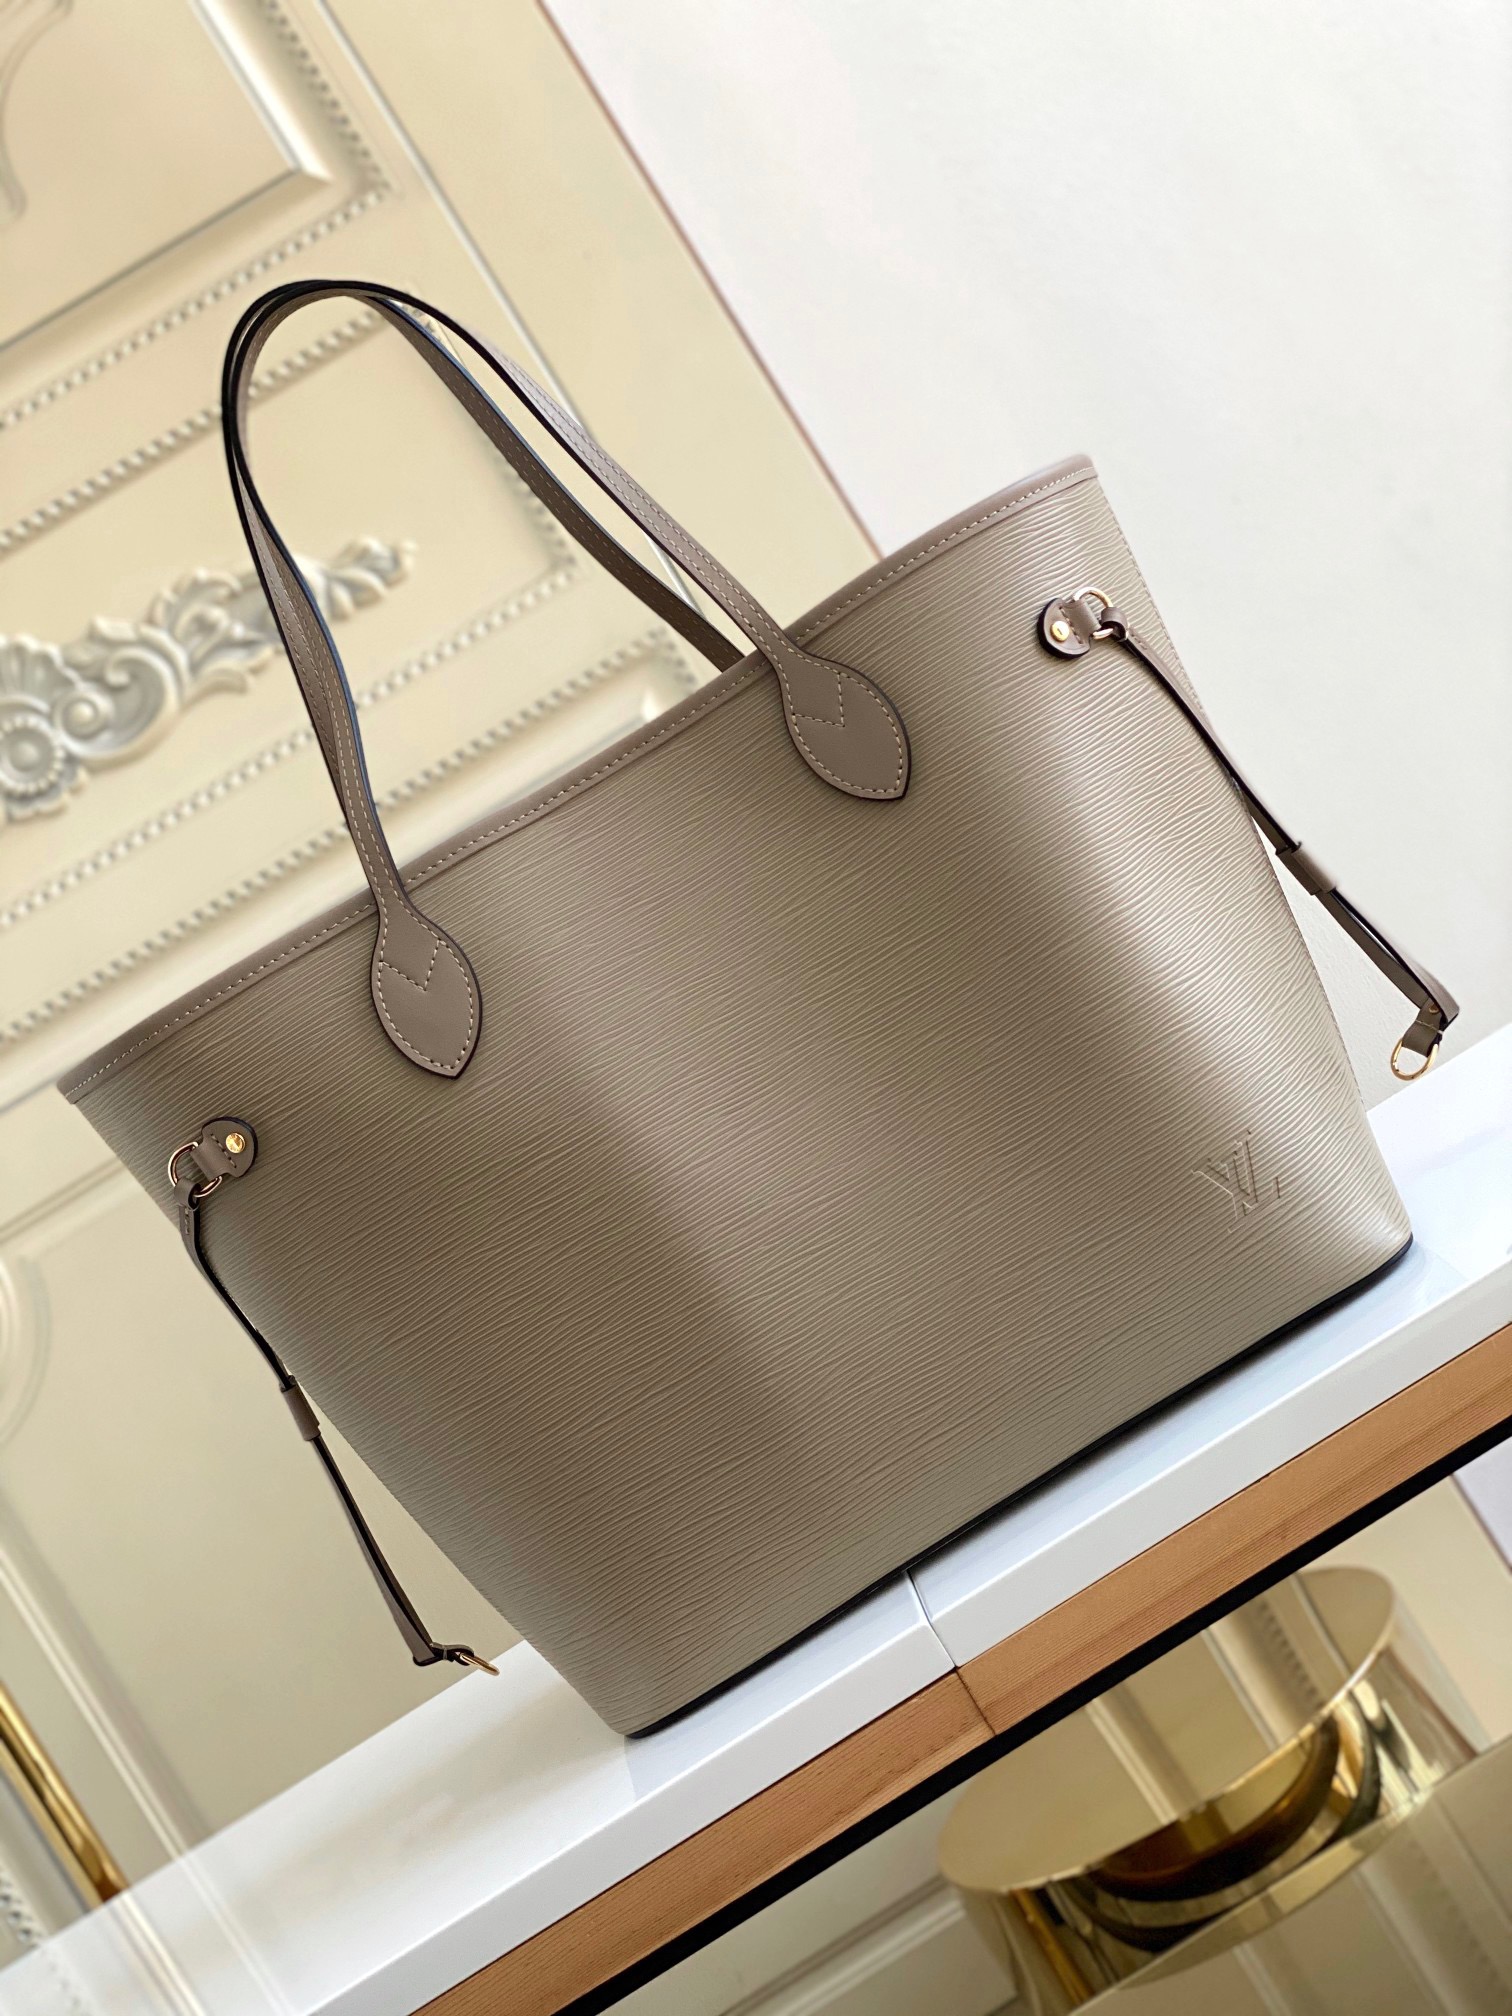 Louis Vuitton Handbag For Women in 261134, cheap LV Handbags, only $149!